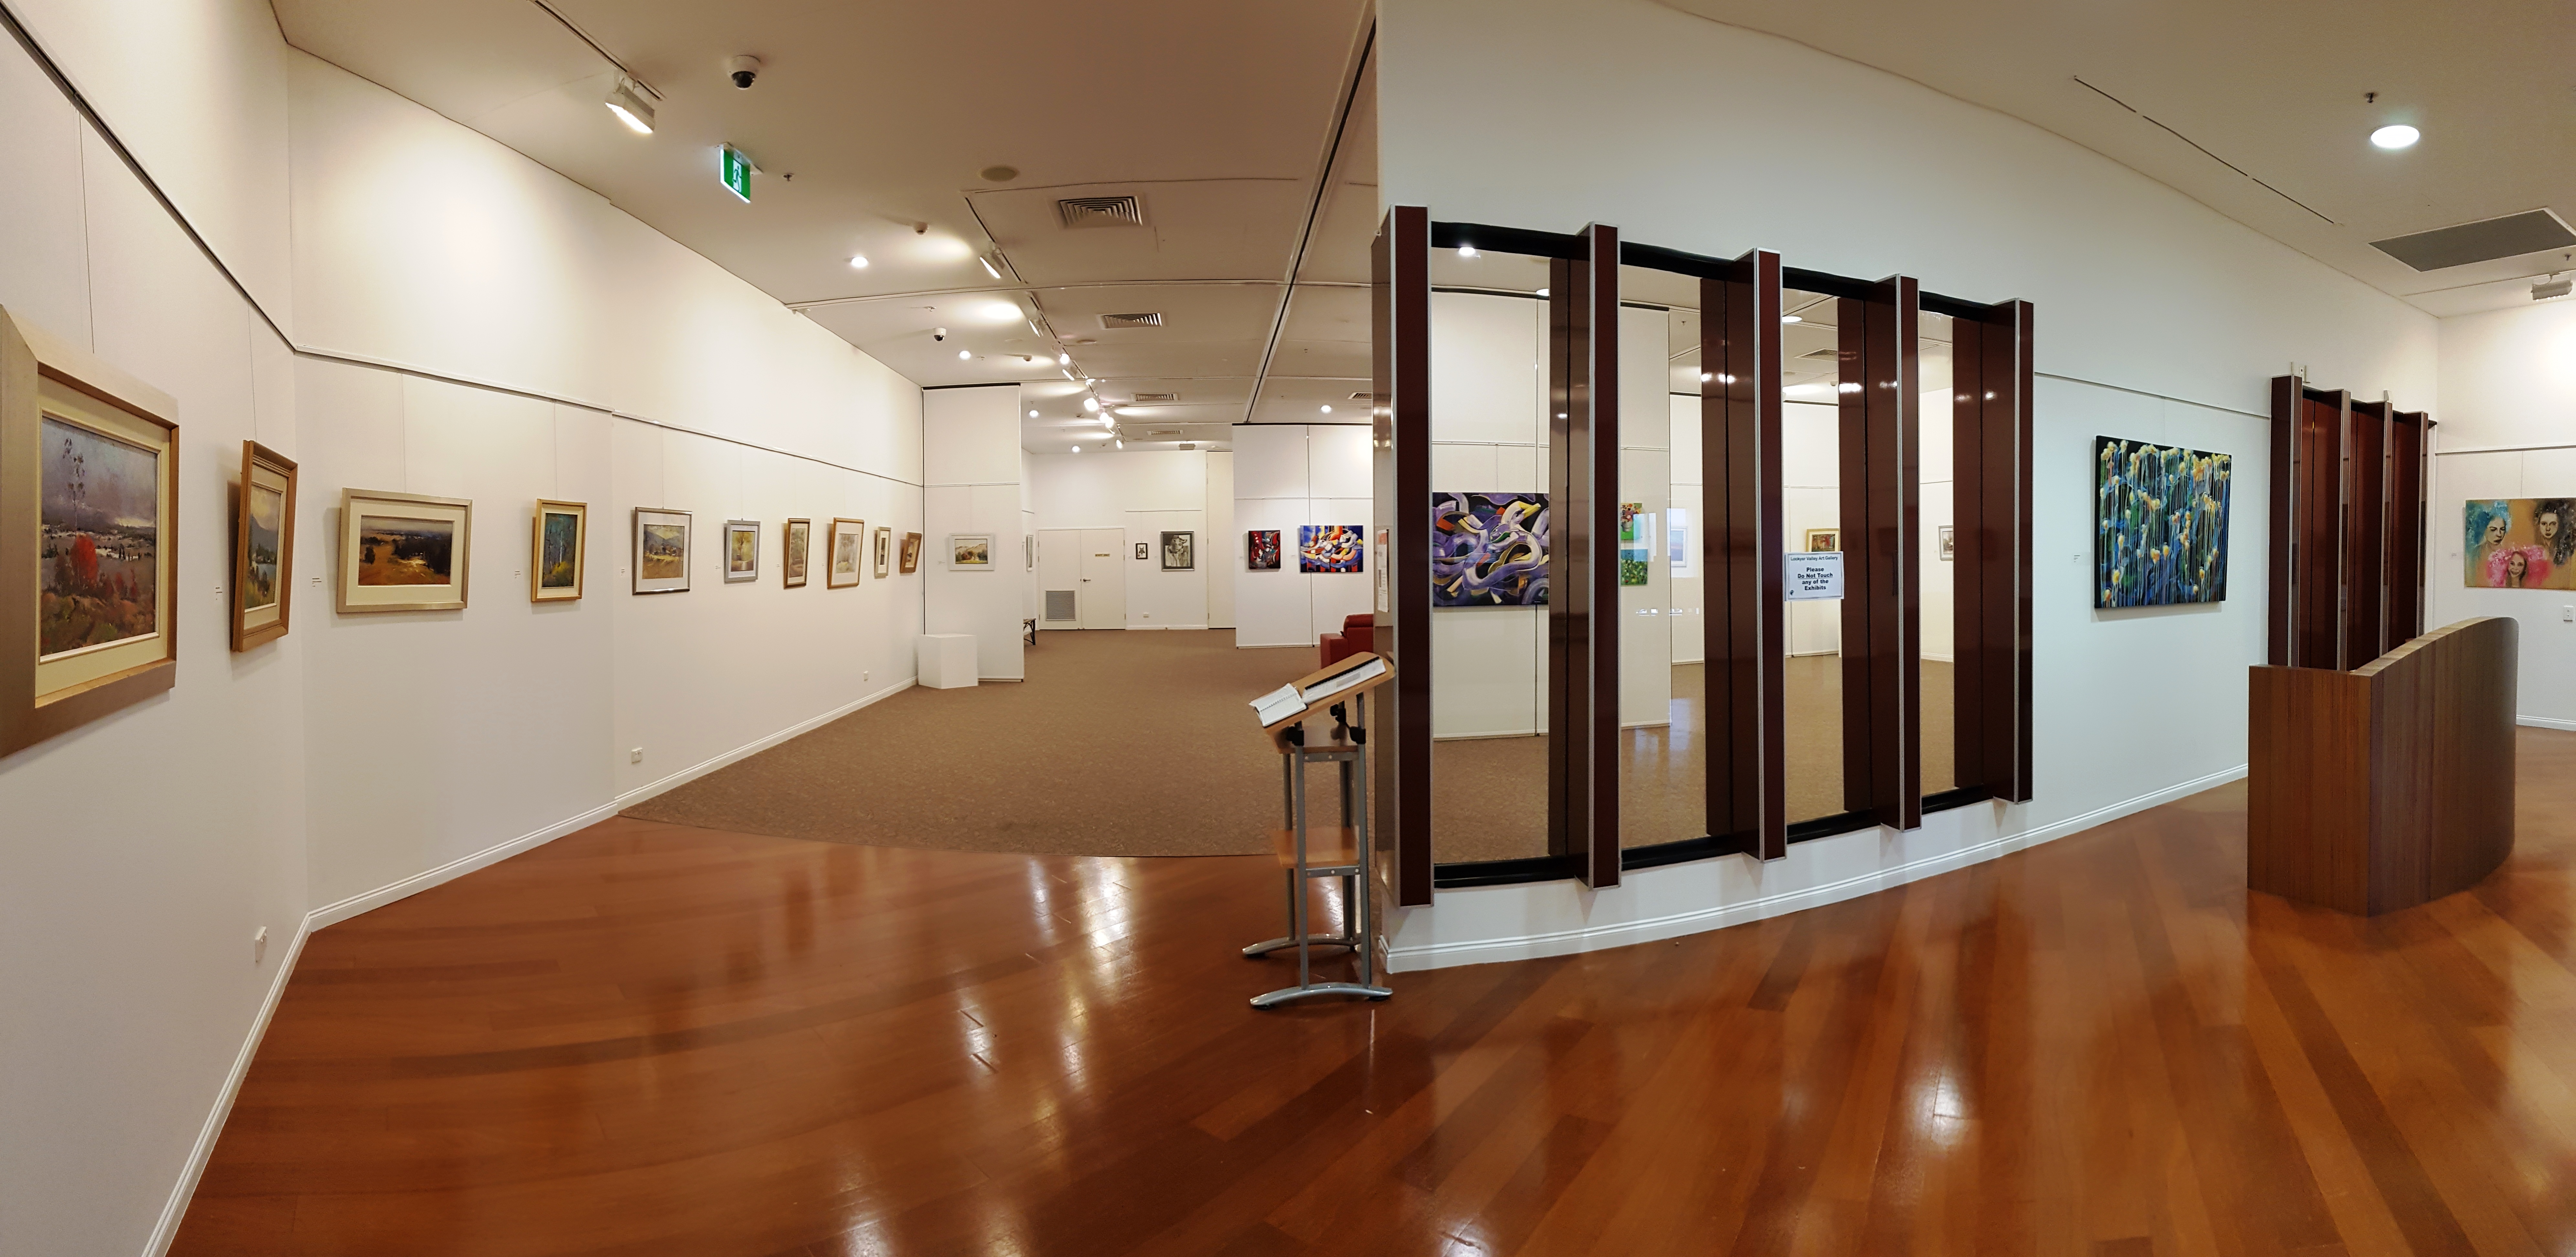 An inside look at Lockyer Valley Art Gallery